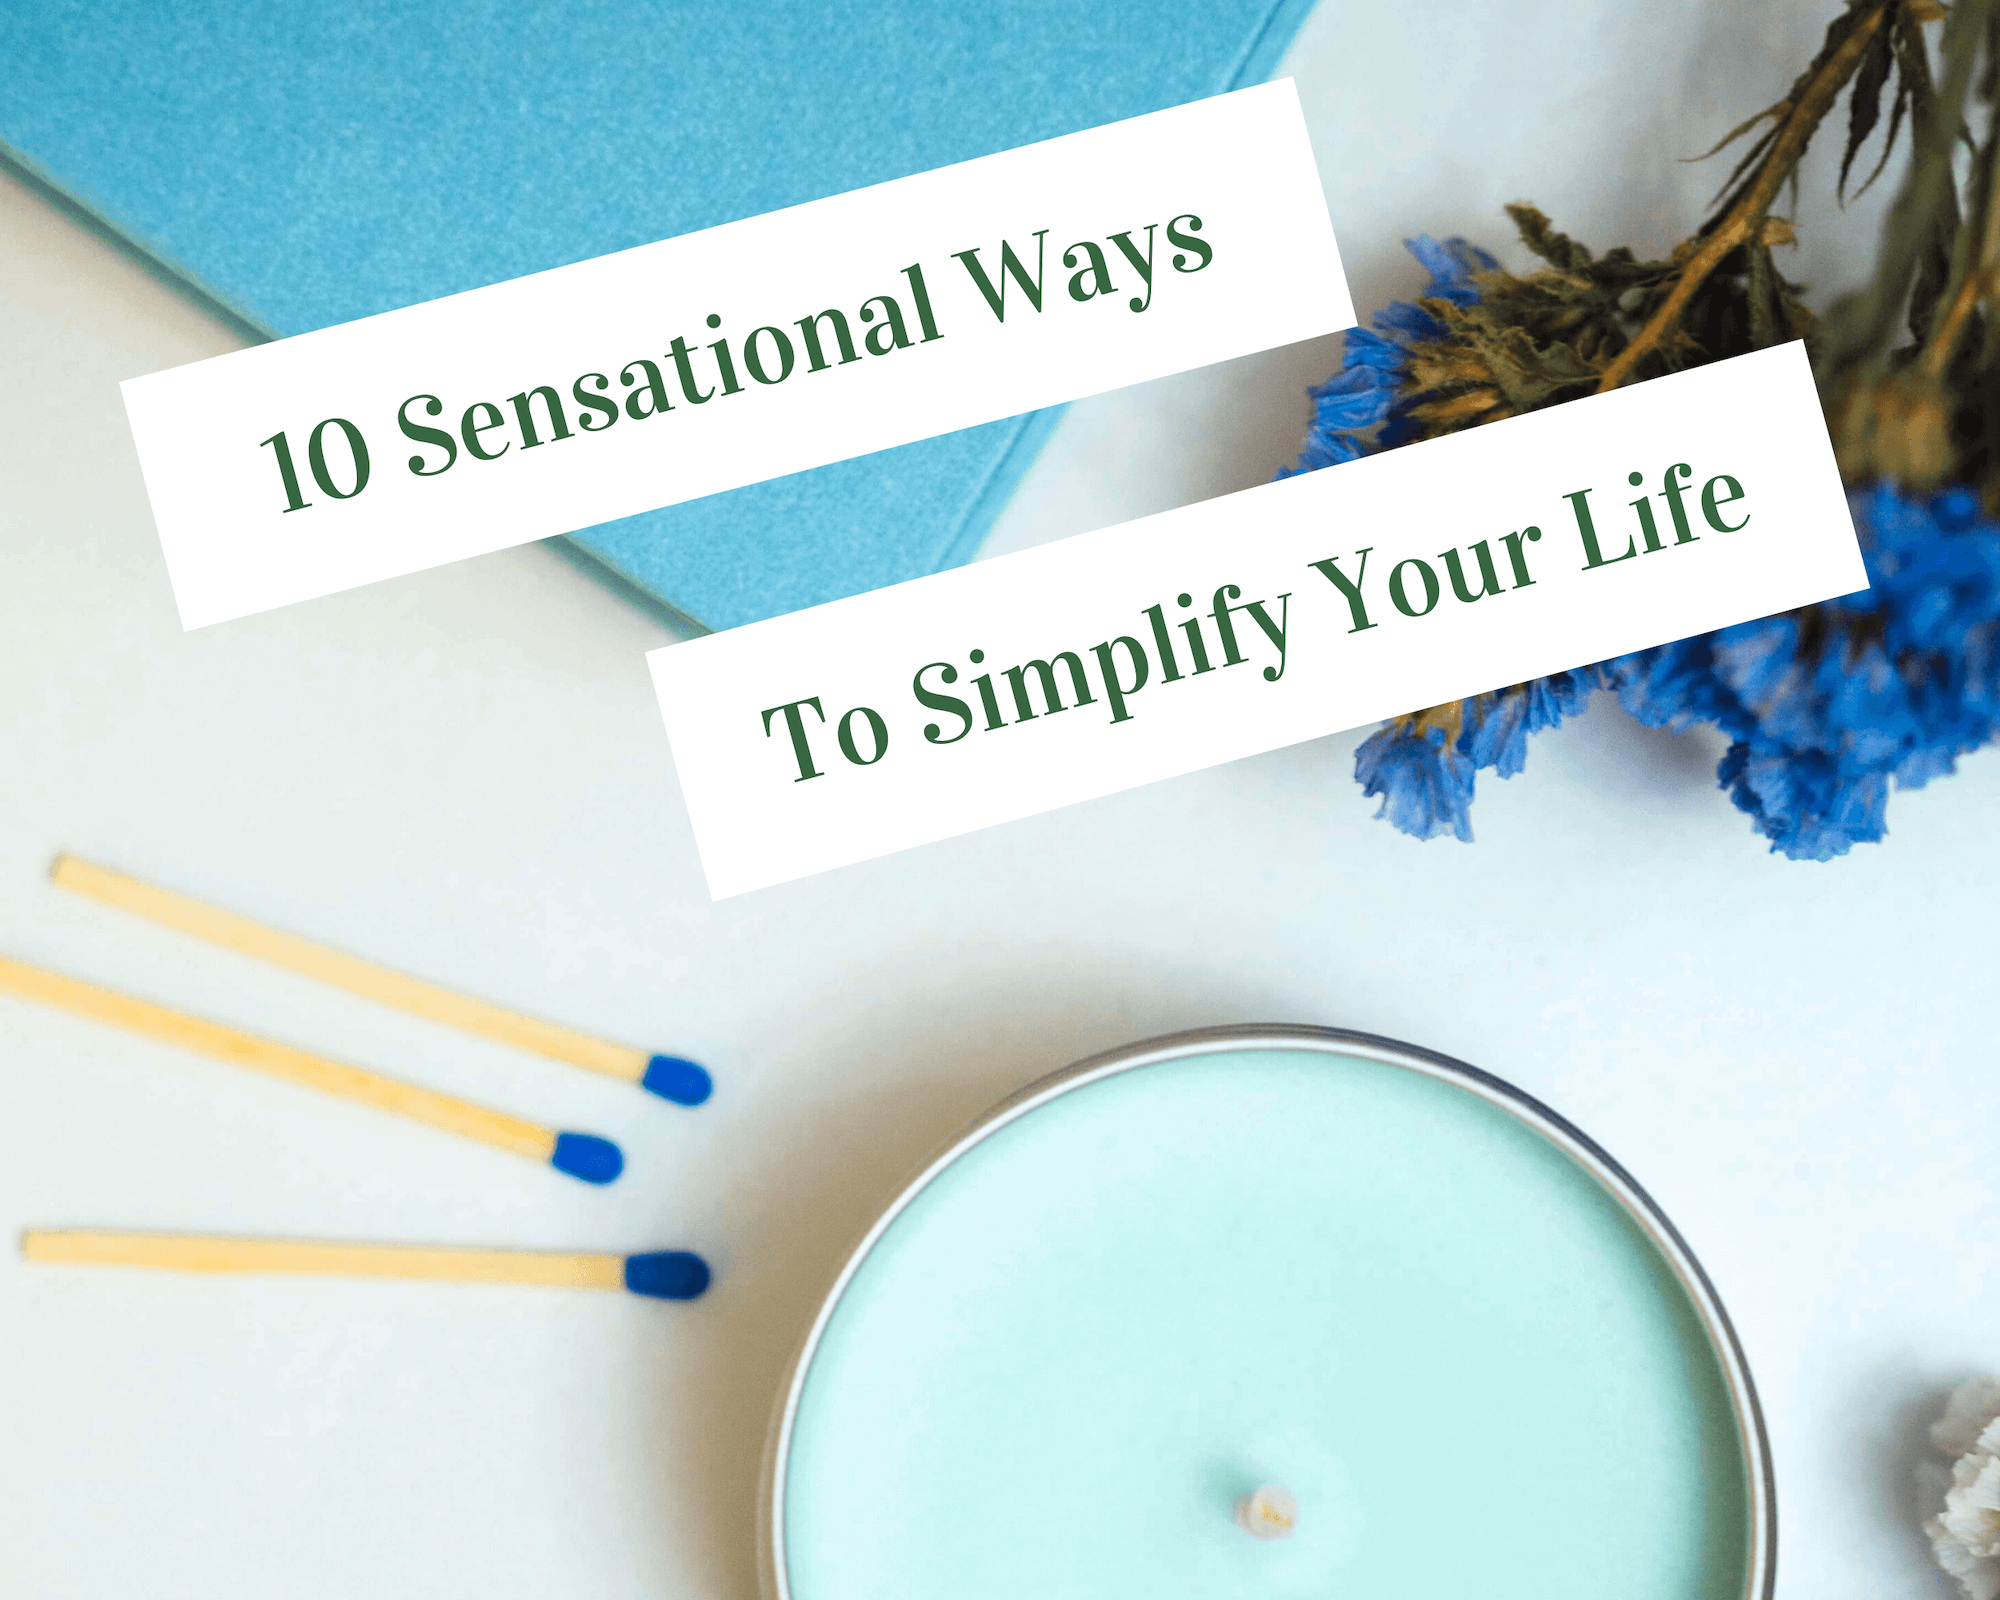 10 sensational ways to simplify your life